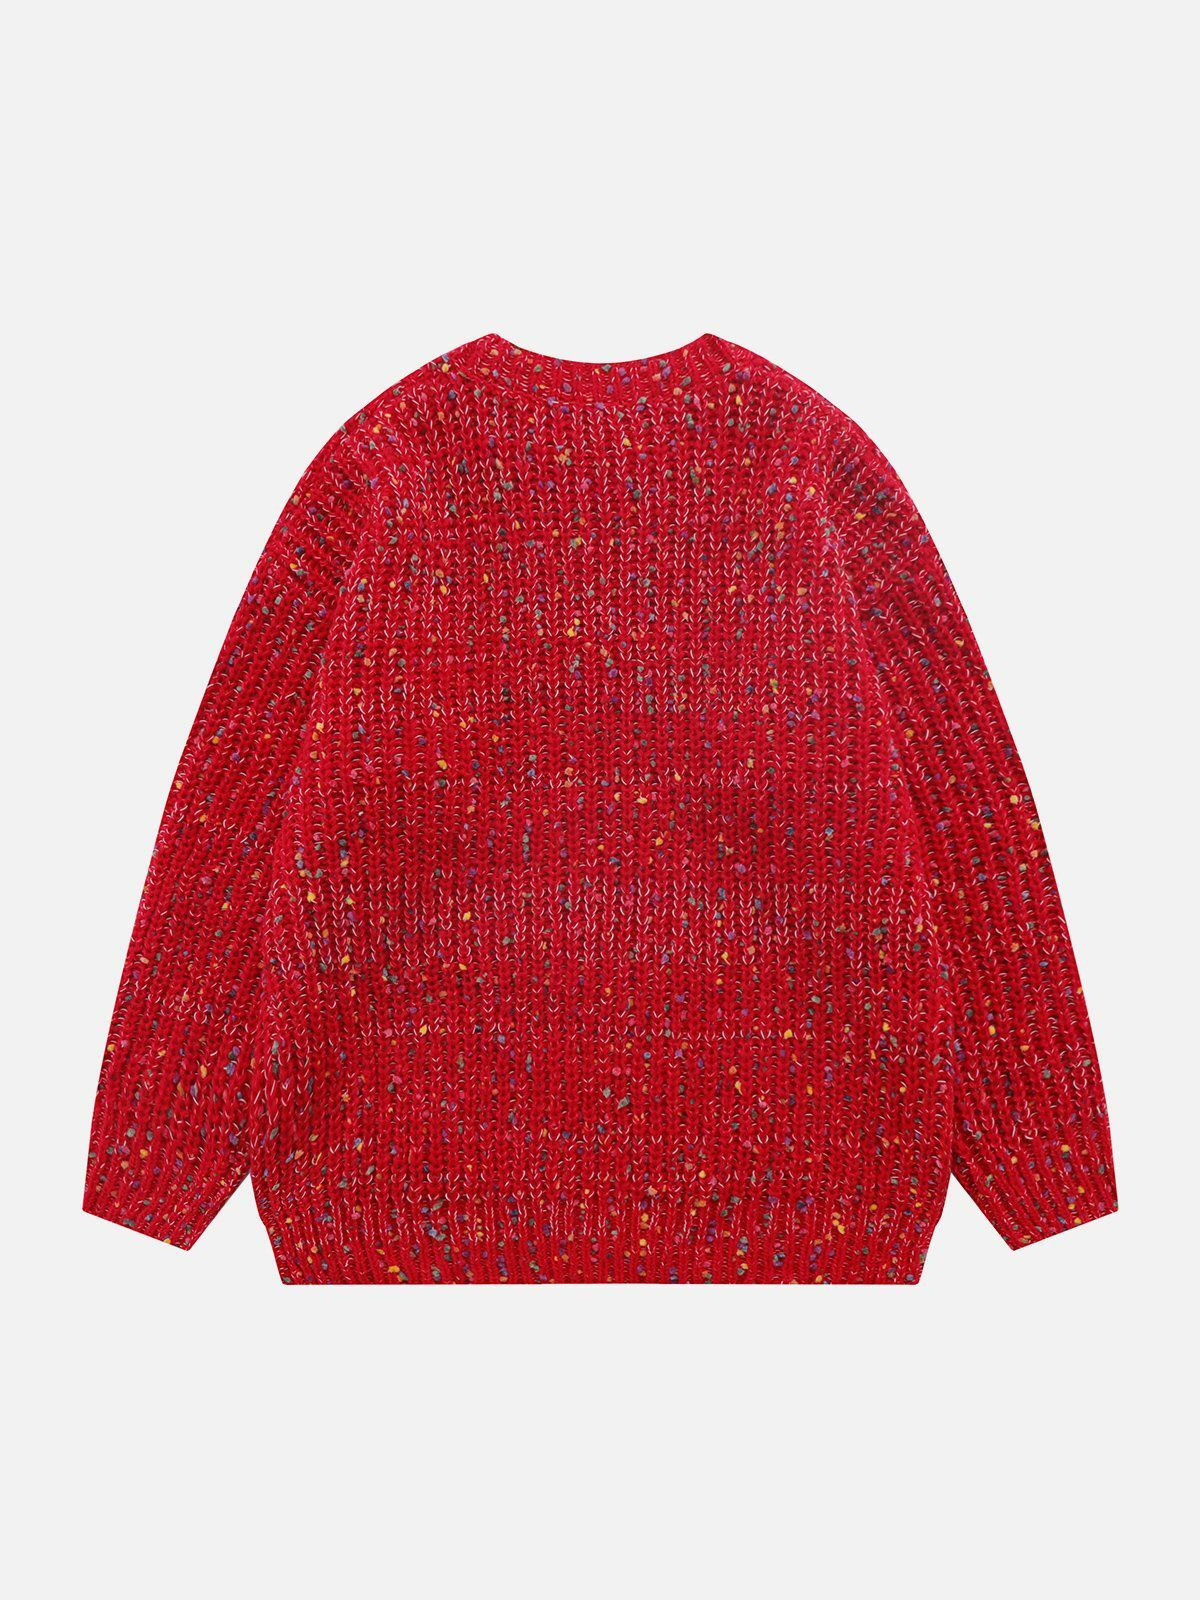 colorful dot sweater retro & vibrant streetwear 1986